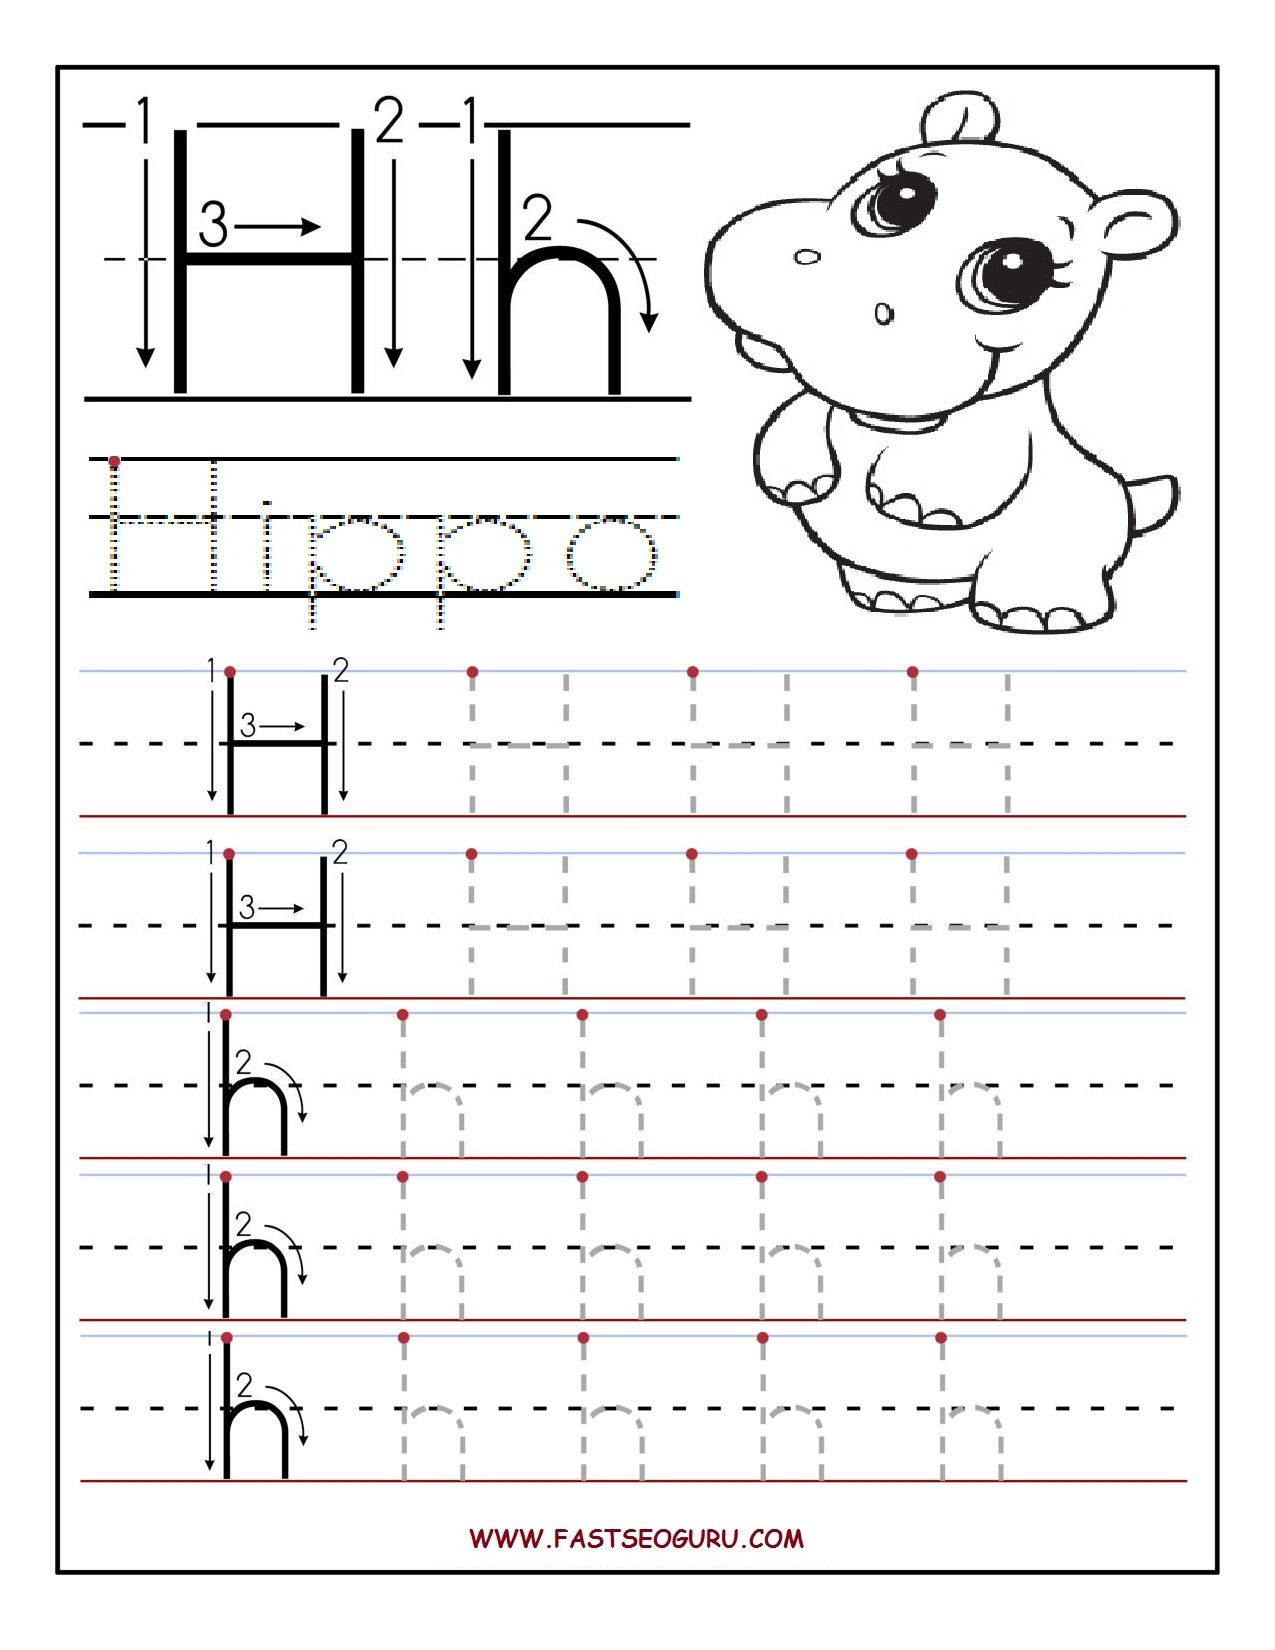 Printable Letter H Tracing Worksheets For Preschool with Letter H Tracing Printable